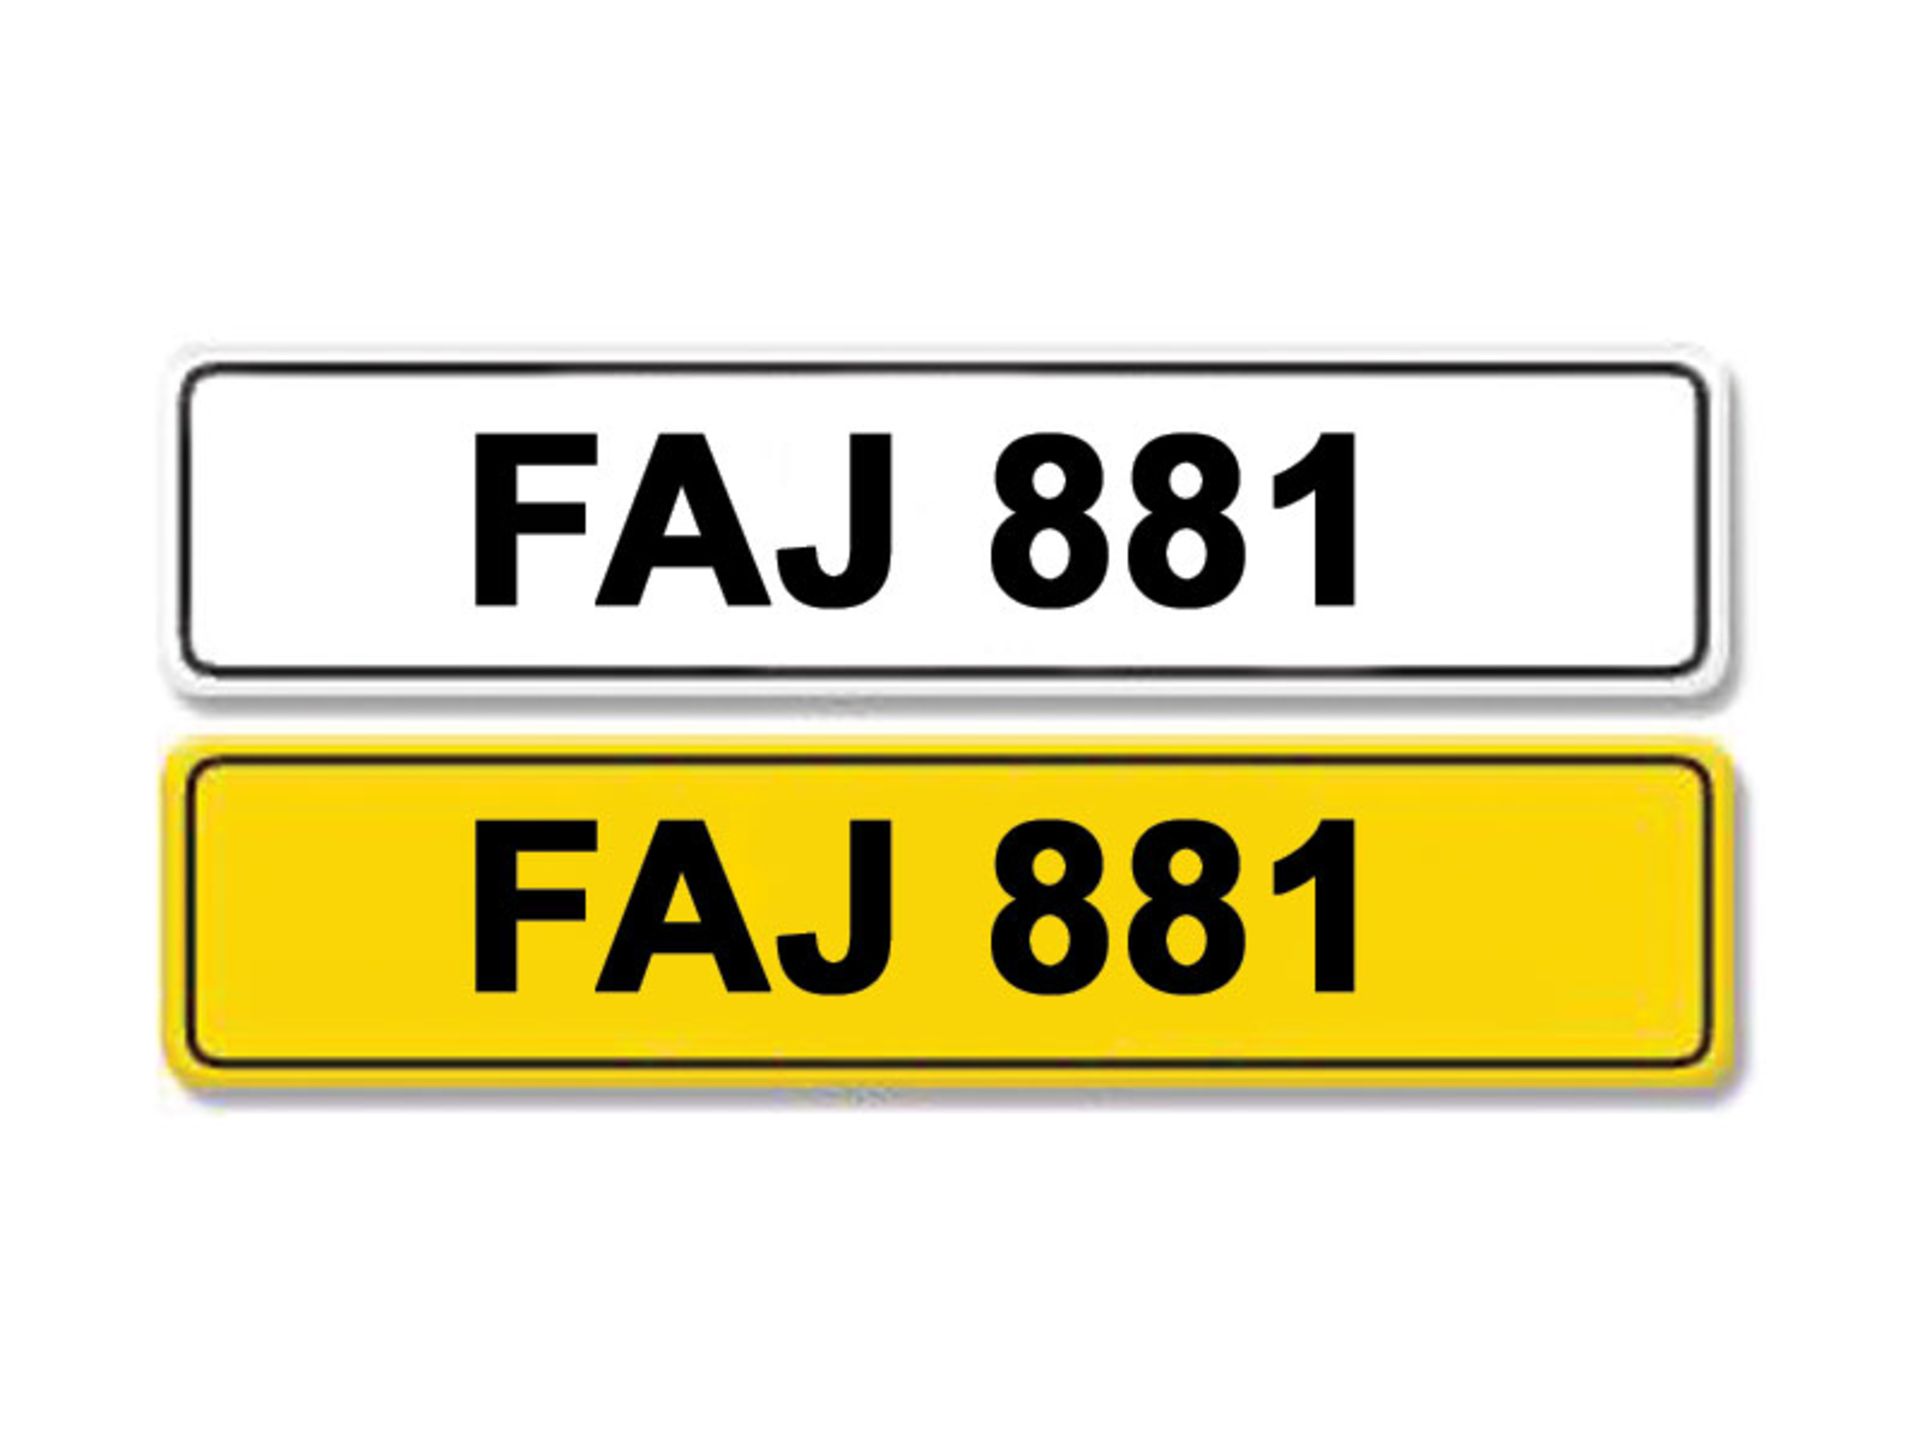 Registration Number FAJ 881